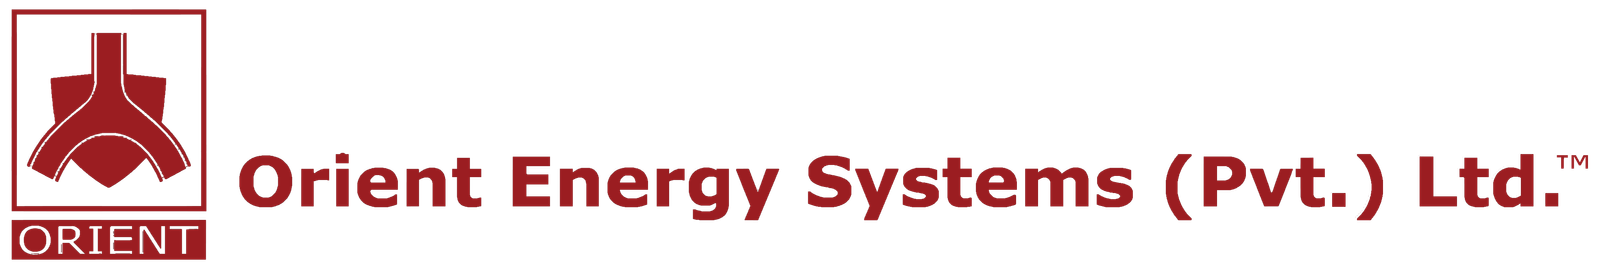 Orient Energy Systems Ltd., Bangladesh